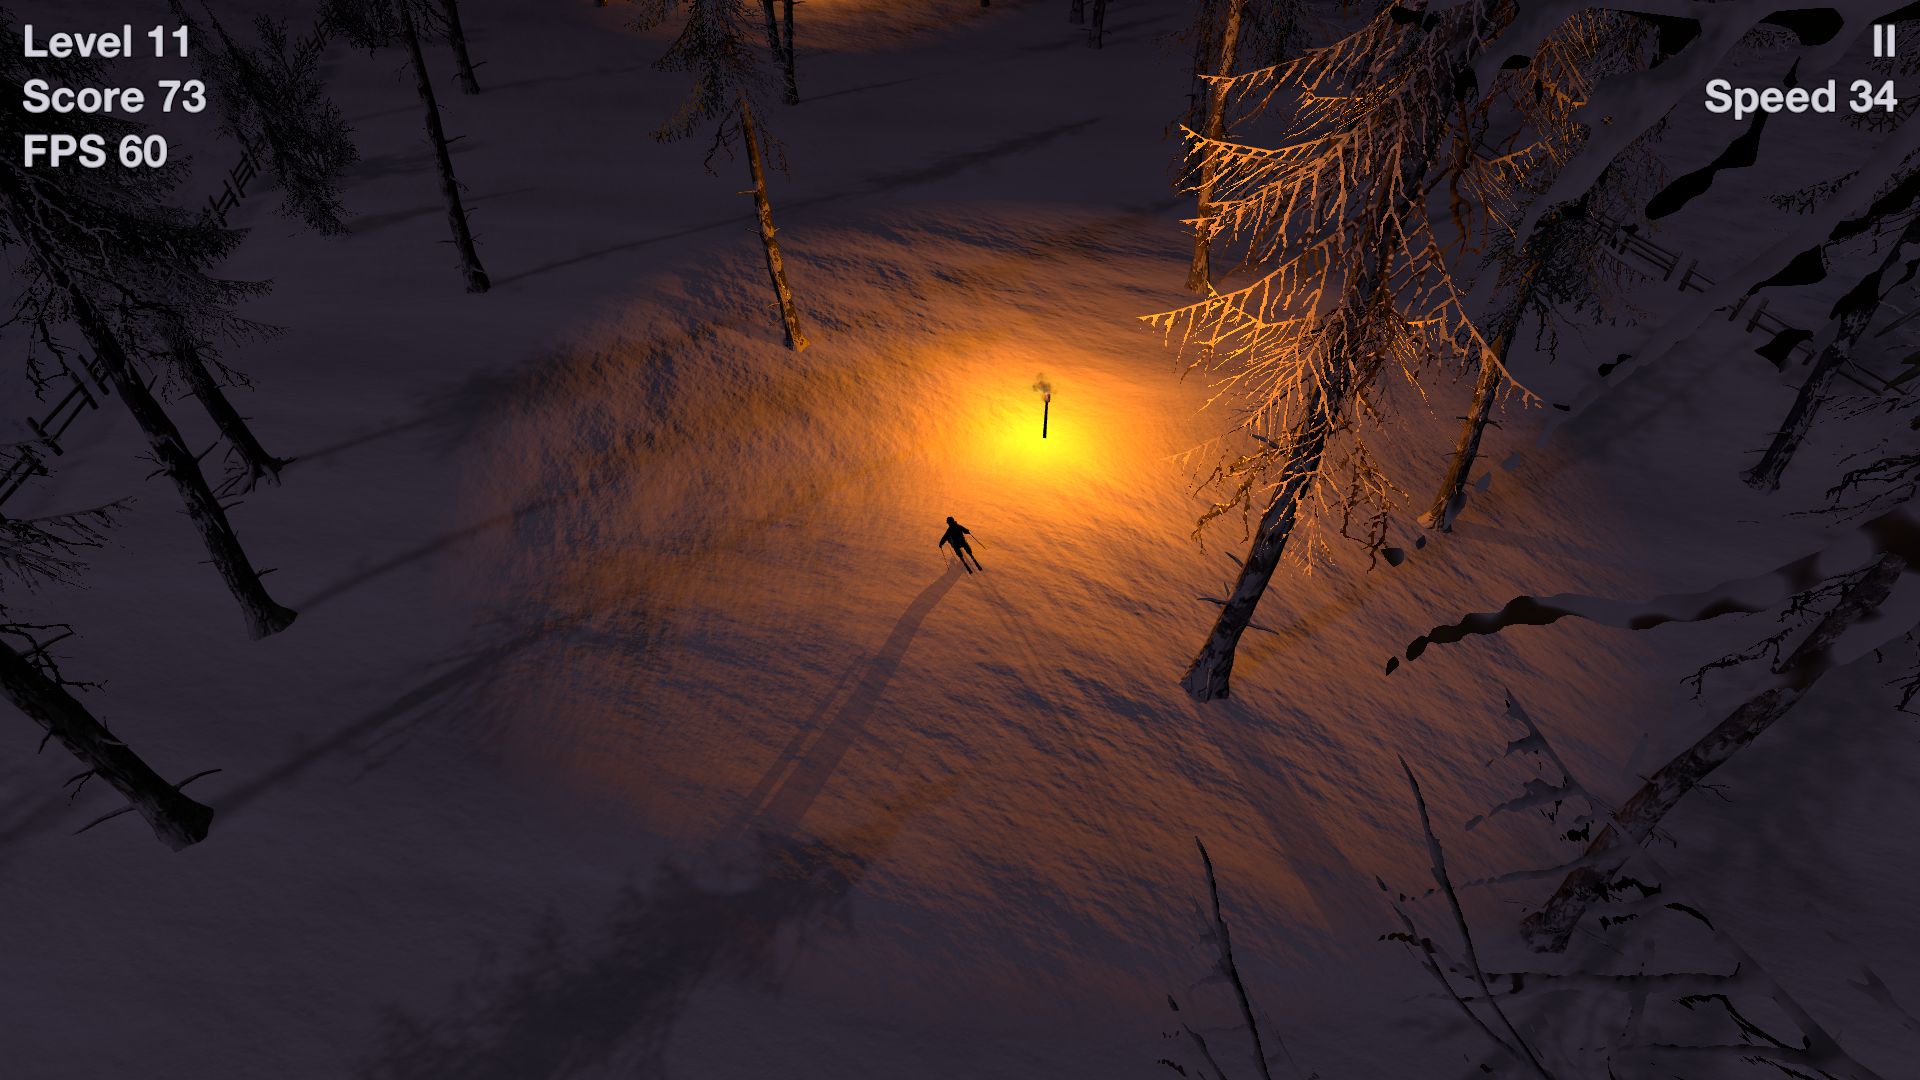 Alpine Ski 3 - Android game screenshots.